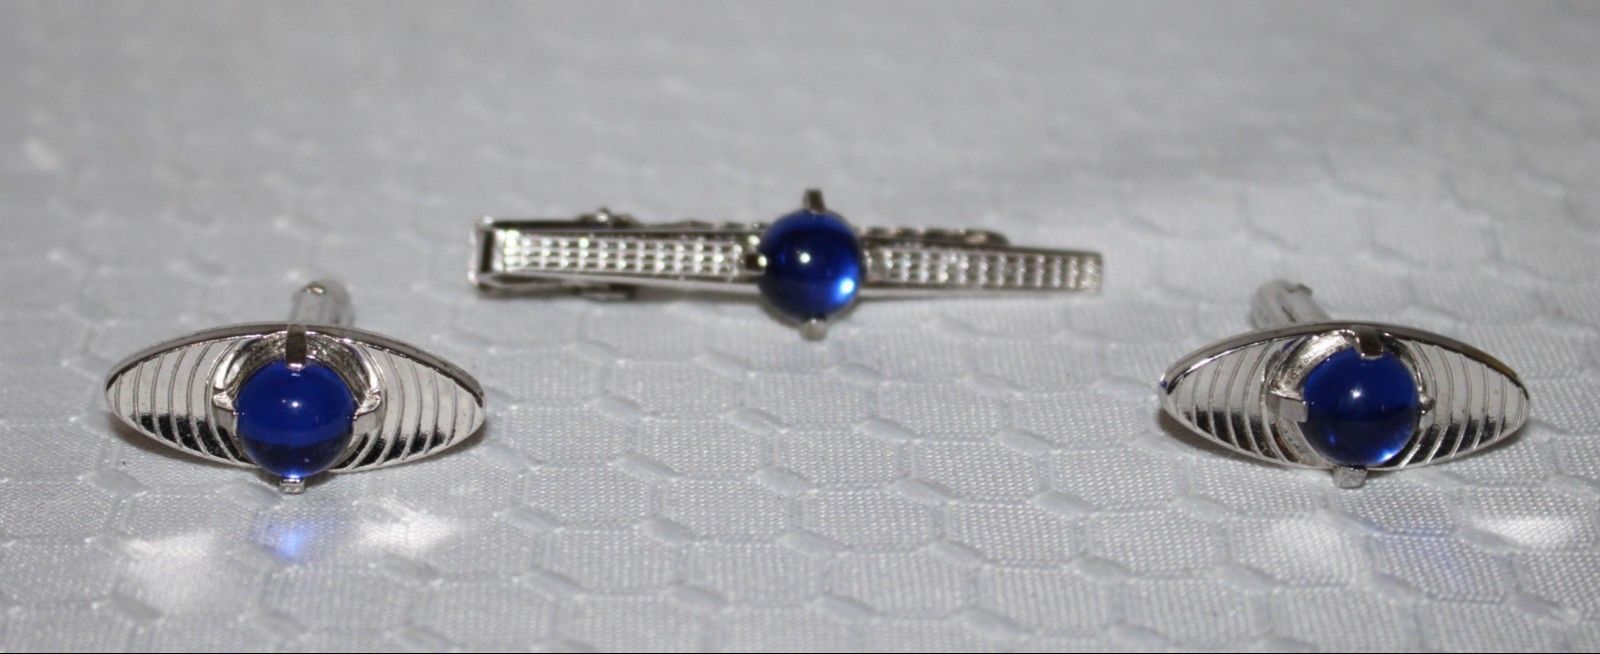 Vintage Anson Cufflinks Tie Clip in Original Box -Cobalt Blue Cabachons & Silver